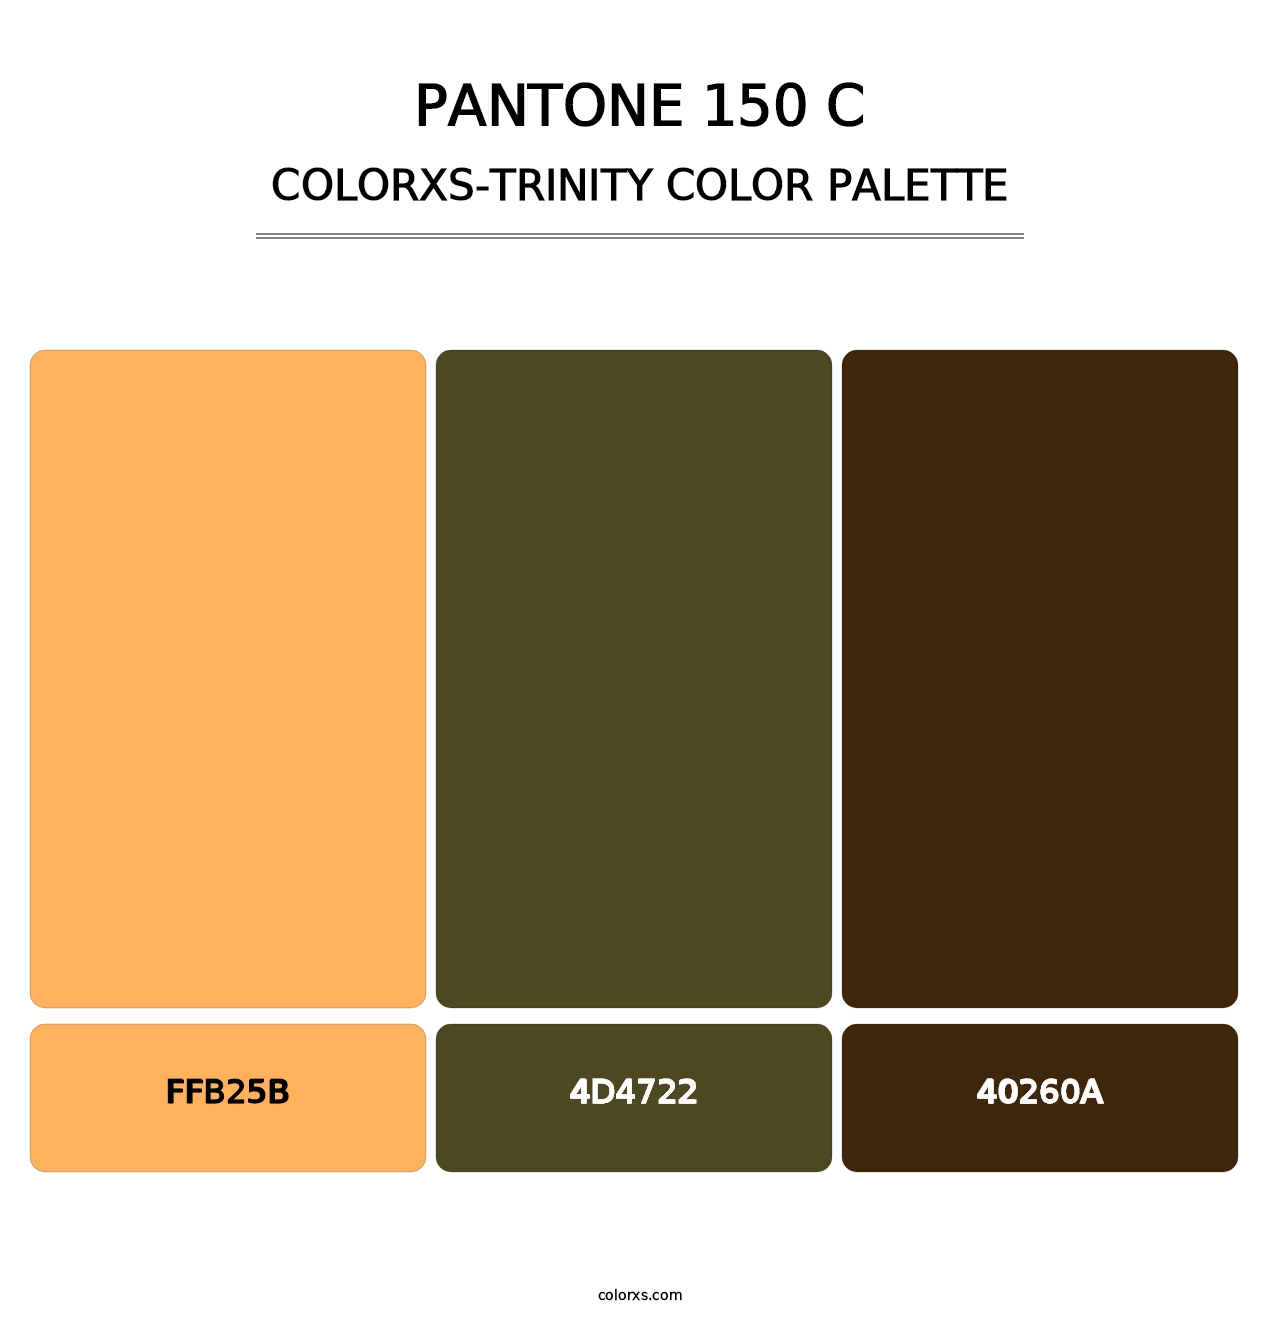 PANTONE 150 C - Colorxs Trinity Palette